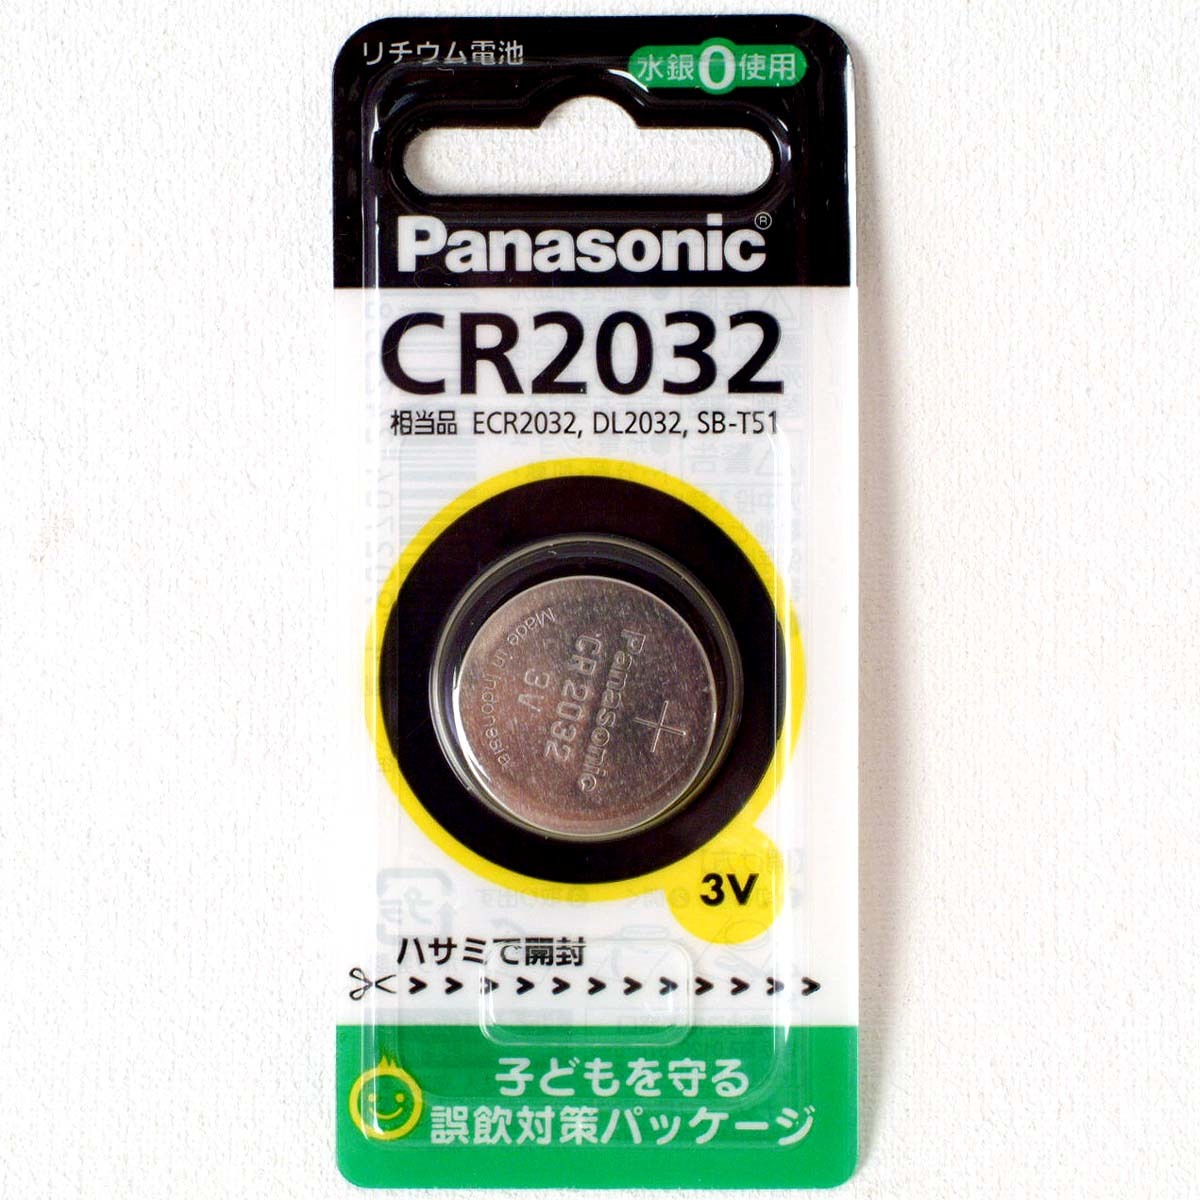 CR2032 coin battery [1 piece ]3V Panasonic Panasonic CR2032P lithium battery [ prompt decision ] button battery ECR2032 DL2032 SB-T51*4902704242358 new goods 